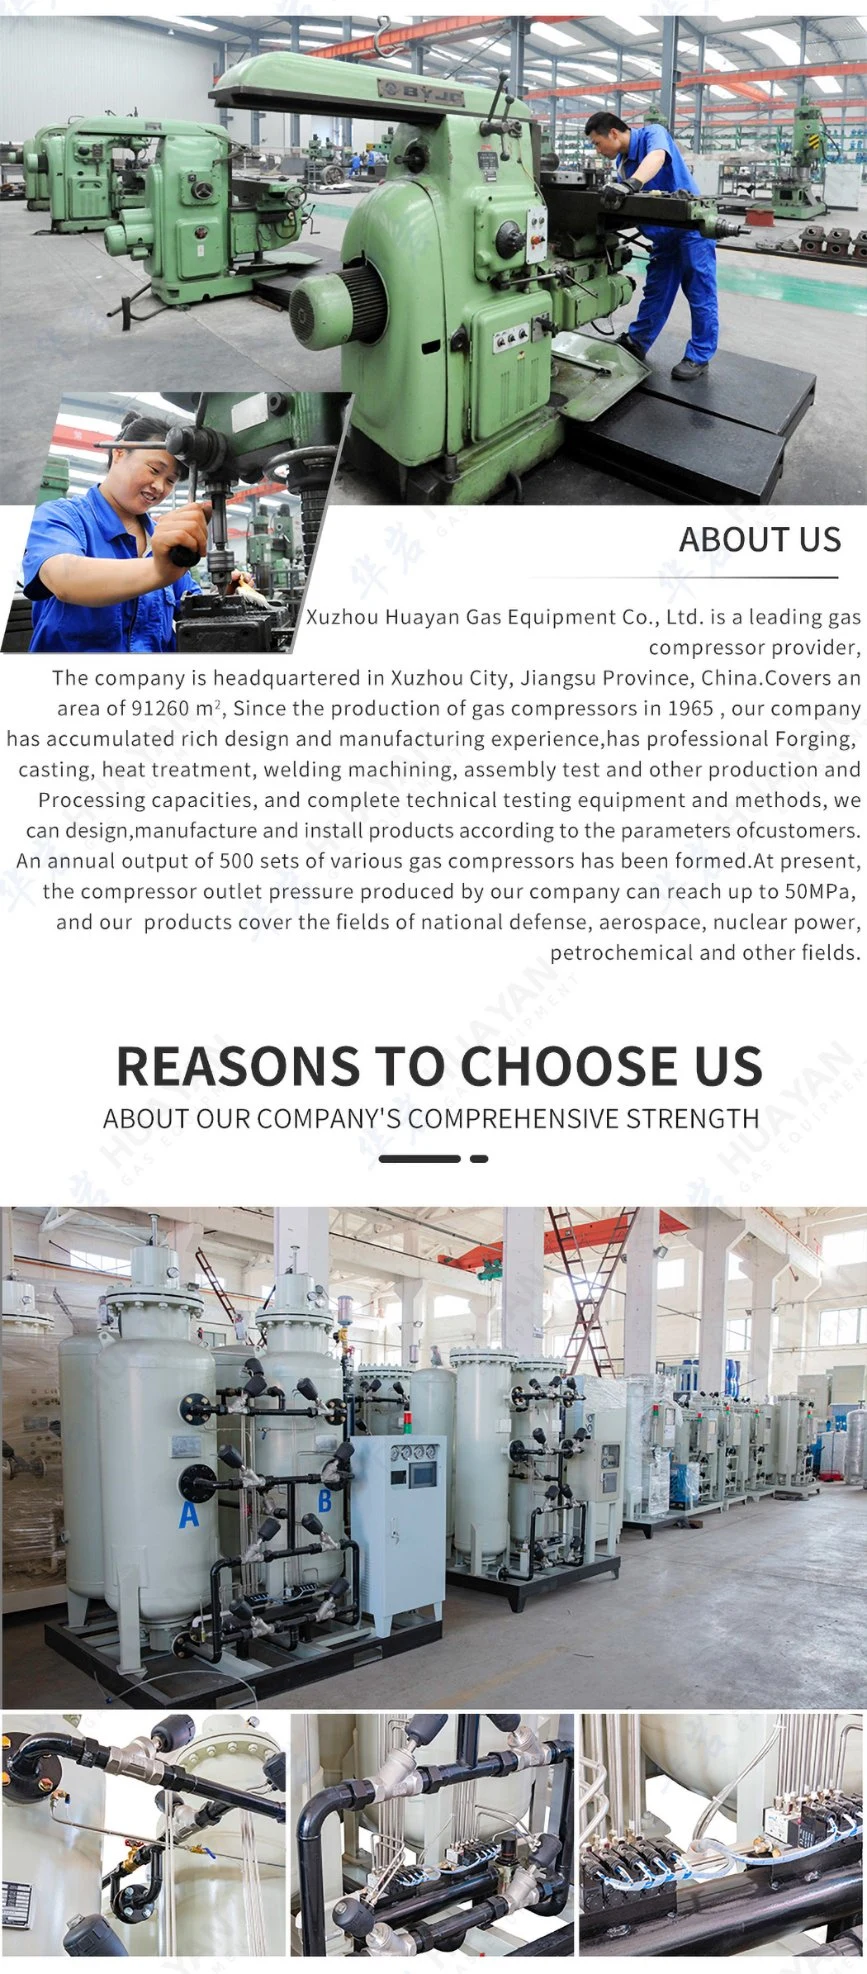 Hyo-20 Oxygen Filling System Industrial Medical Psa Oxygen Plant Hospital Oxygen Generator